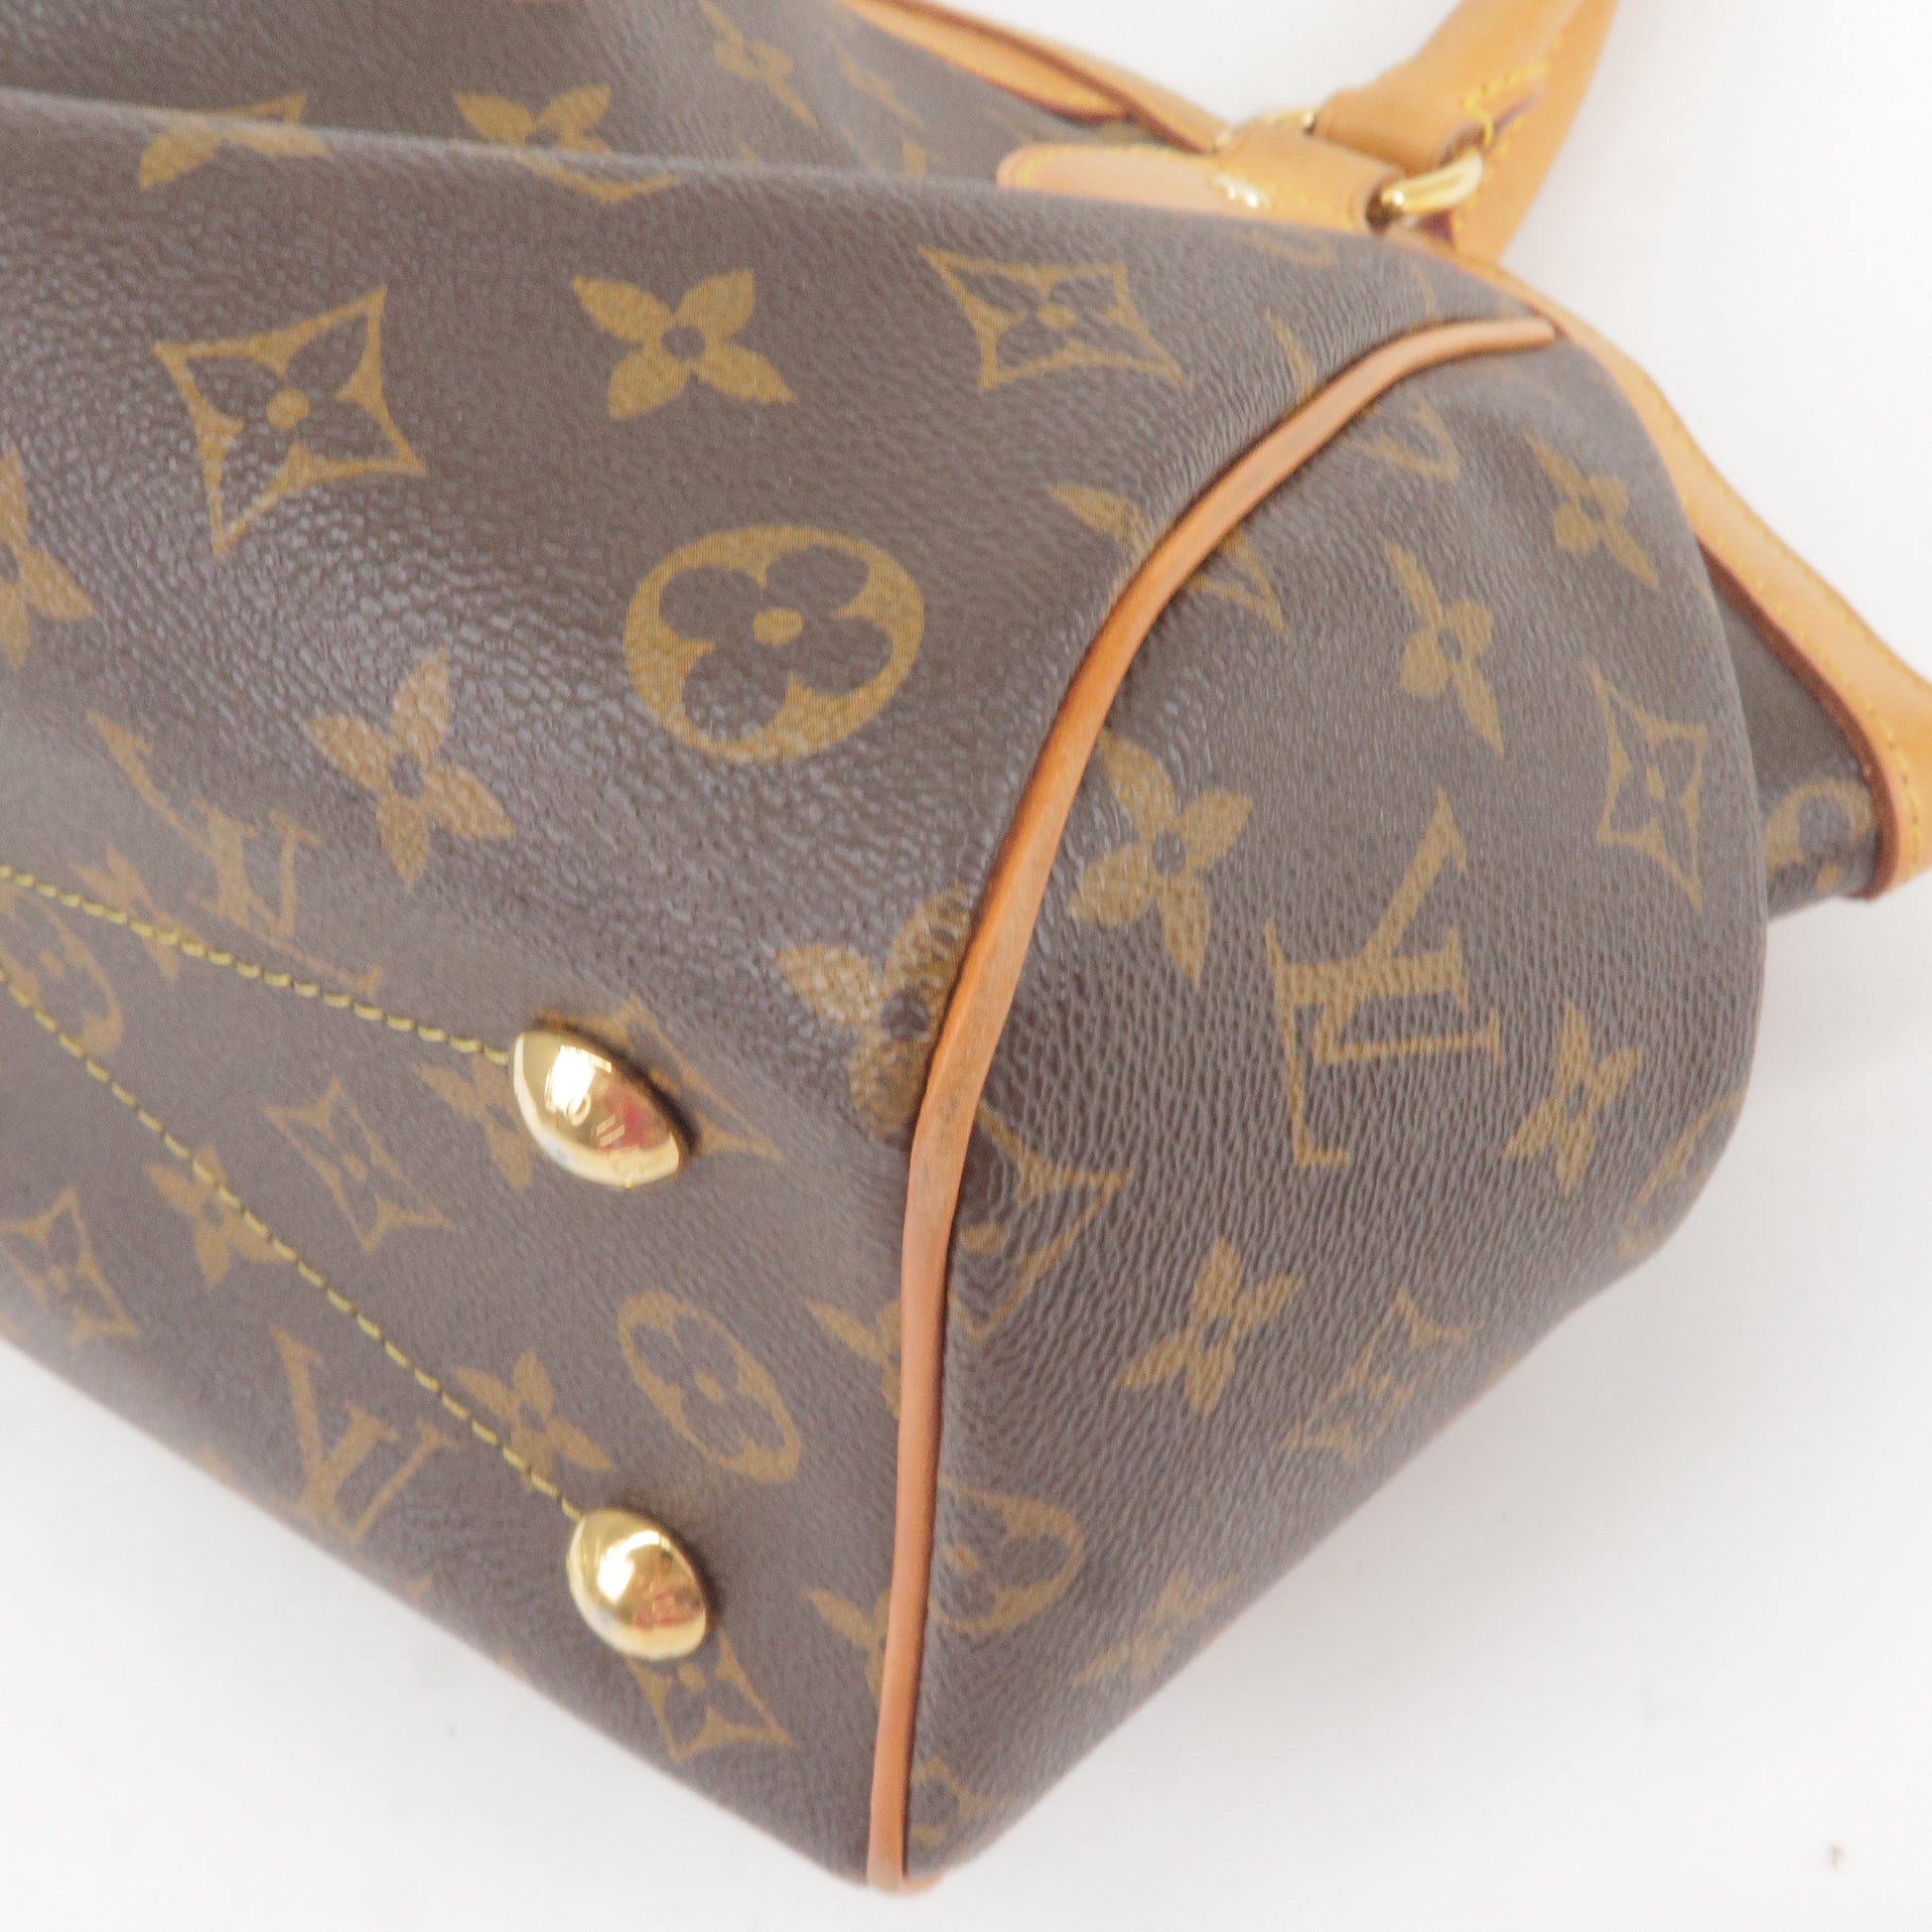 Sold at Auction: Louis Vuitton Monogram Canvas Looping PM Handbag